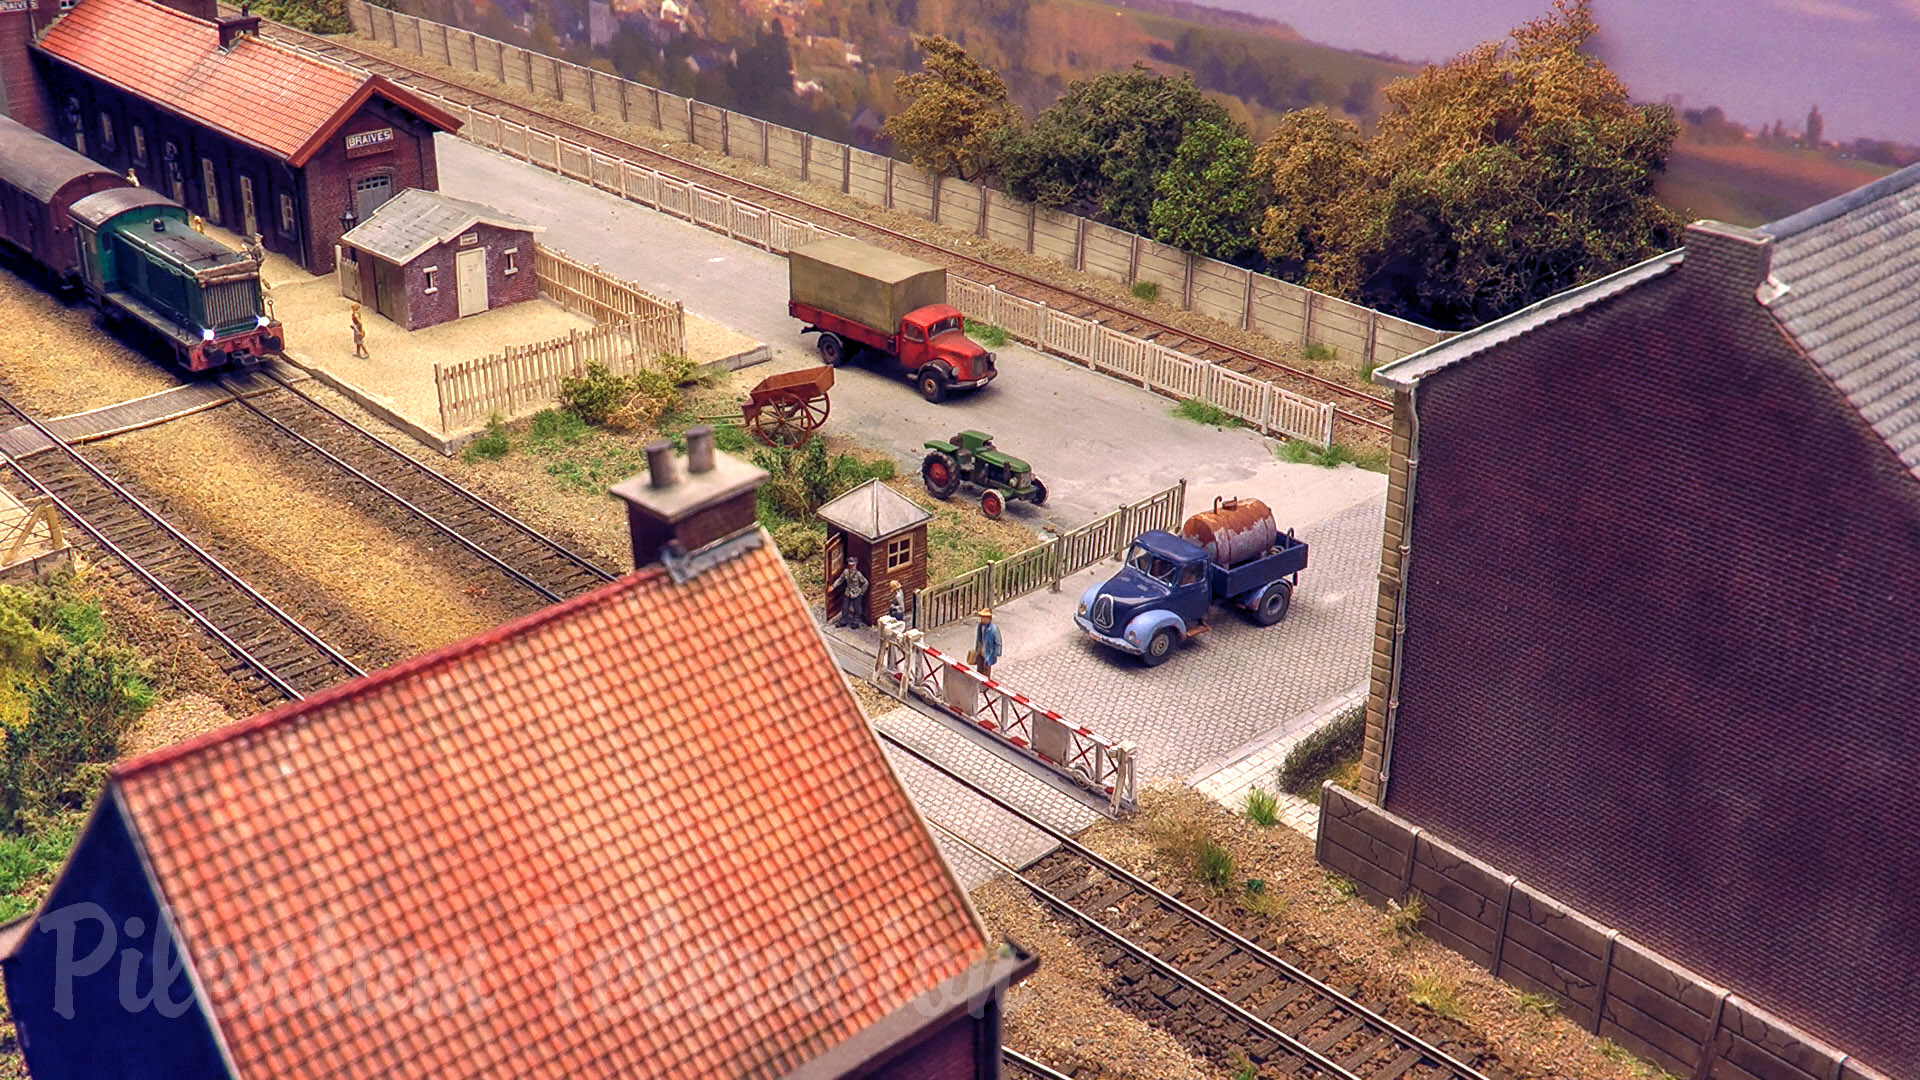 Model railroad layout built in museum quality - Braives railway station by Modelspoorclub Het Spoor